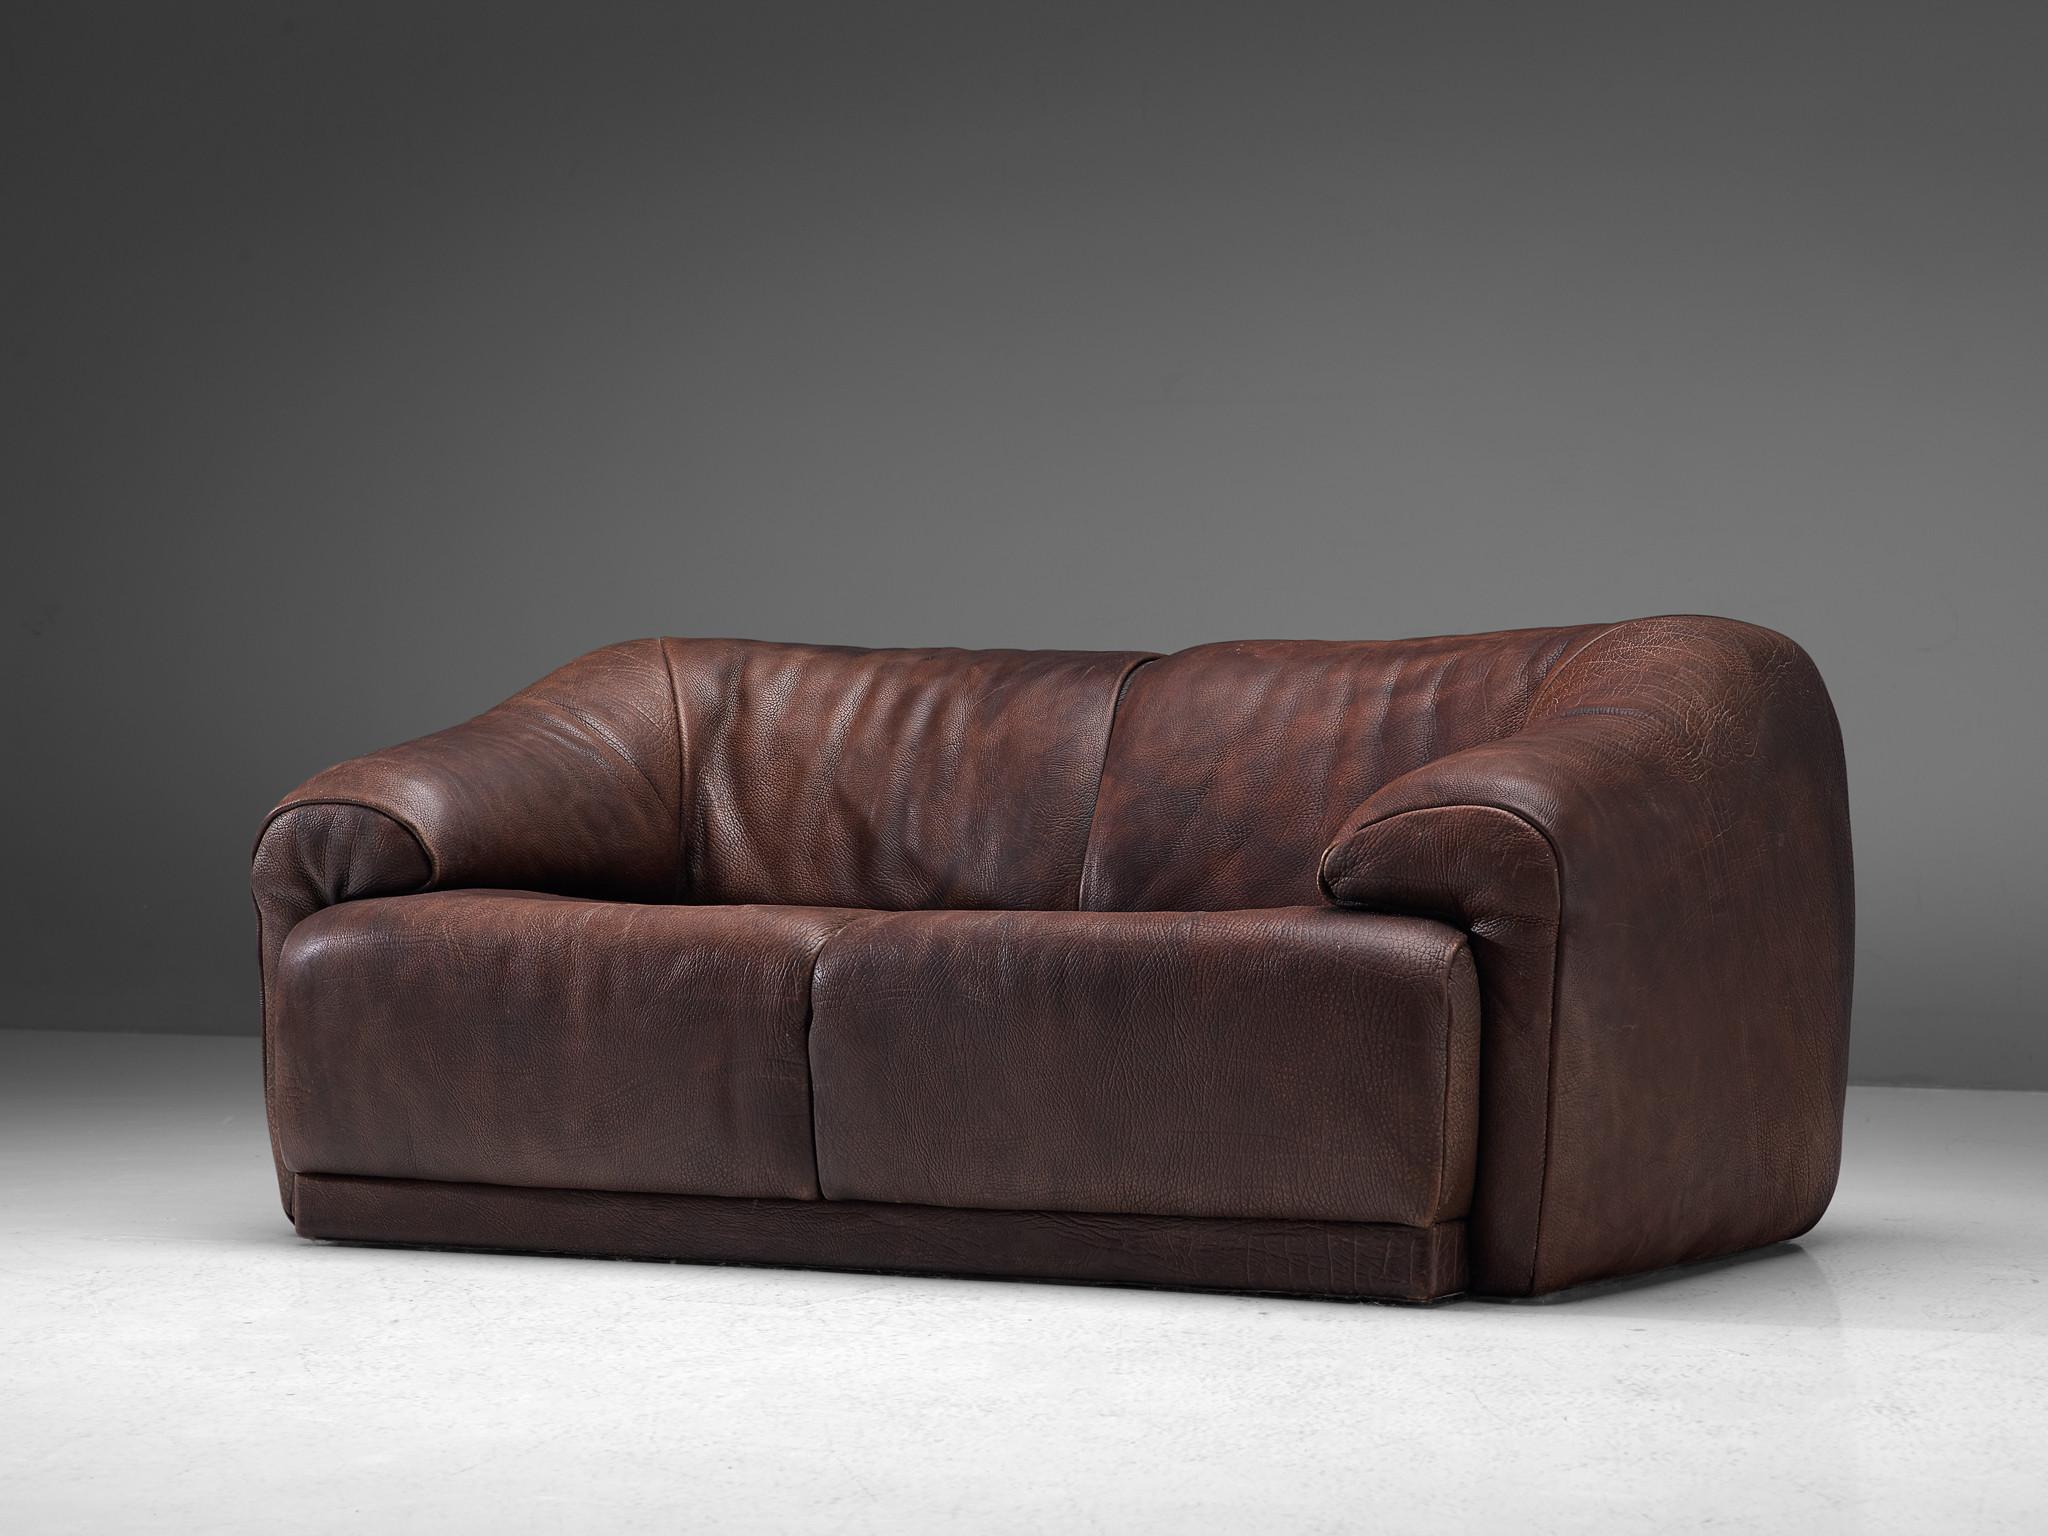 Swiss De Sede Sofa in Brown Leather